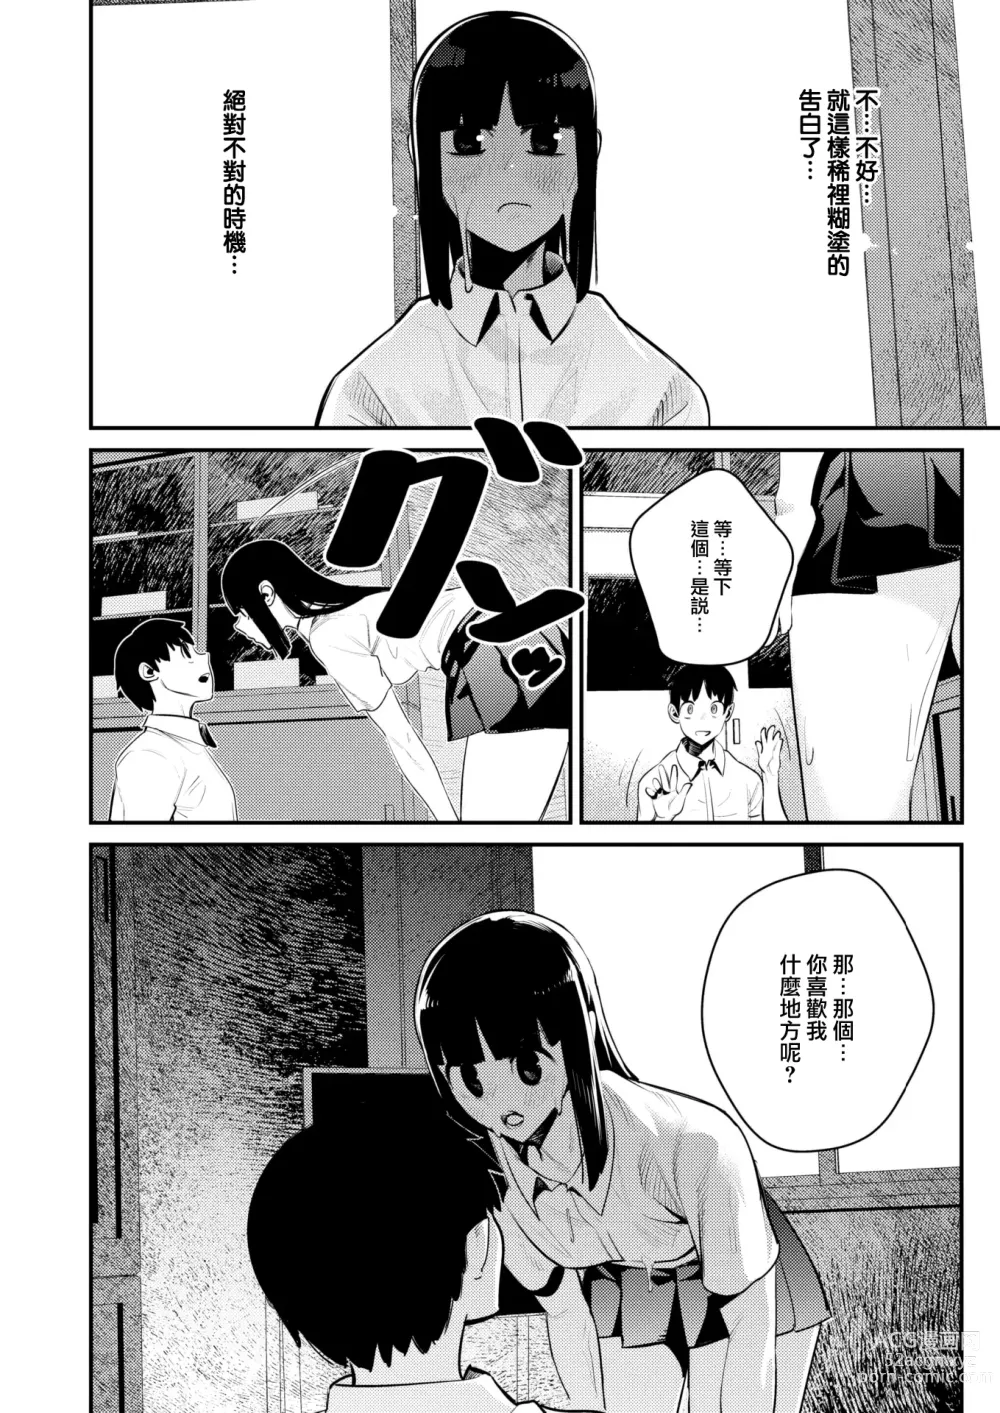 Page 7 of manga Kaijin Netsuai Mokushiroku